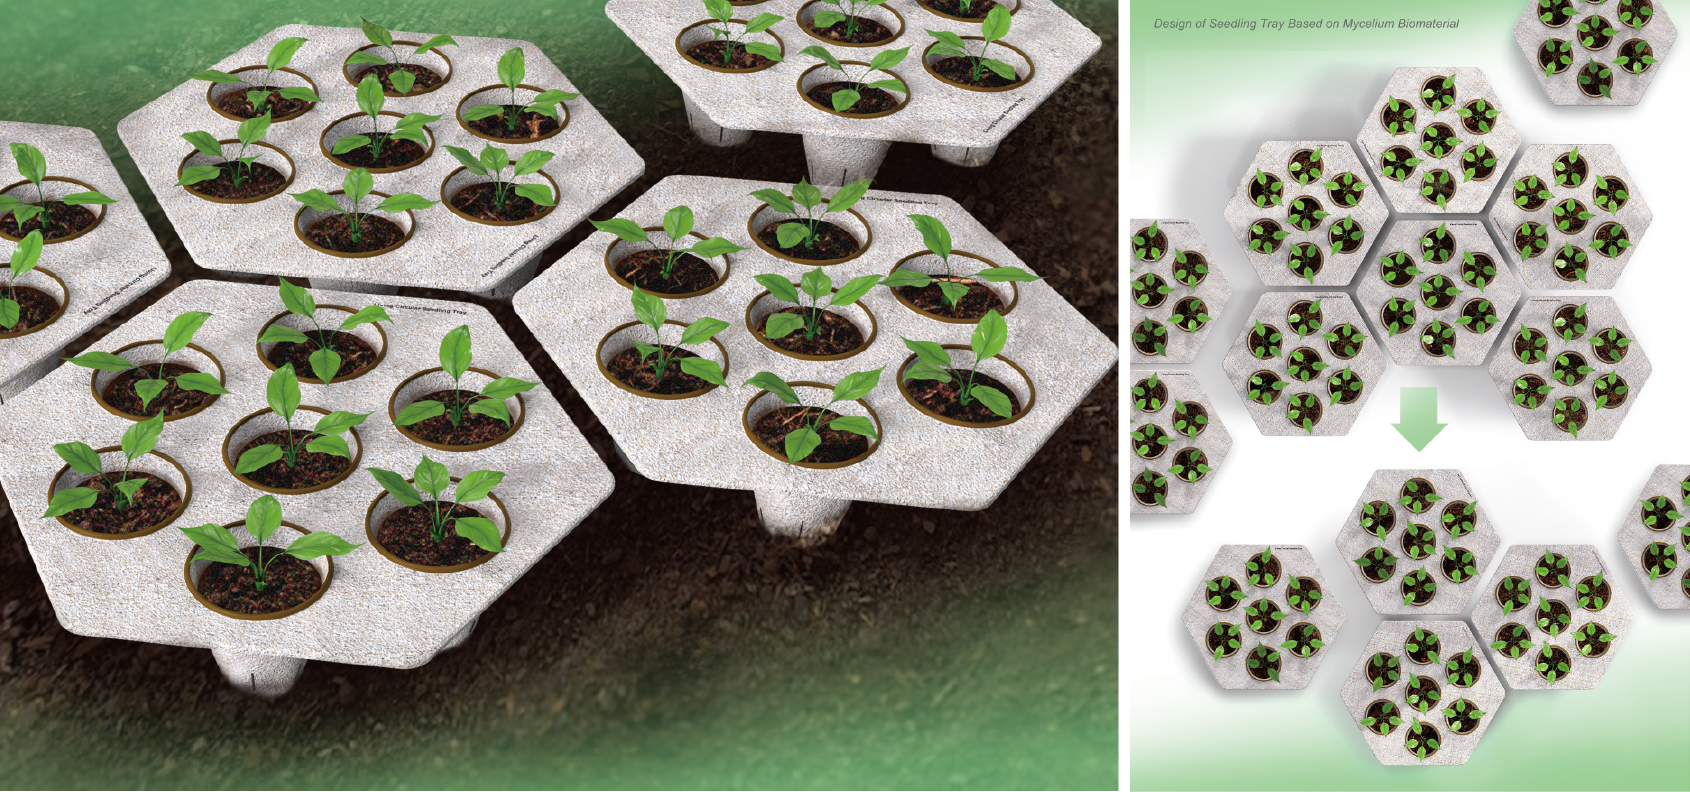 2023年iF學生設計獎獲獎作品_Design of Seedling Tray Based on Mycelium Biomaterial | 育苗托盤/菌絲體生物材料